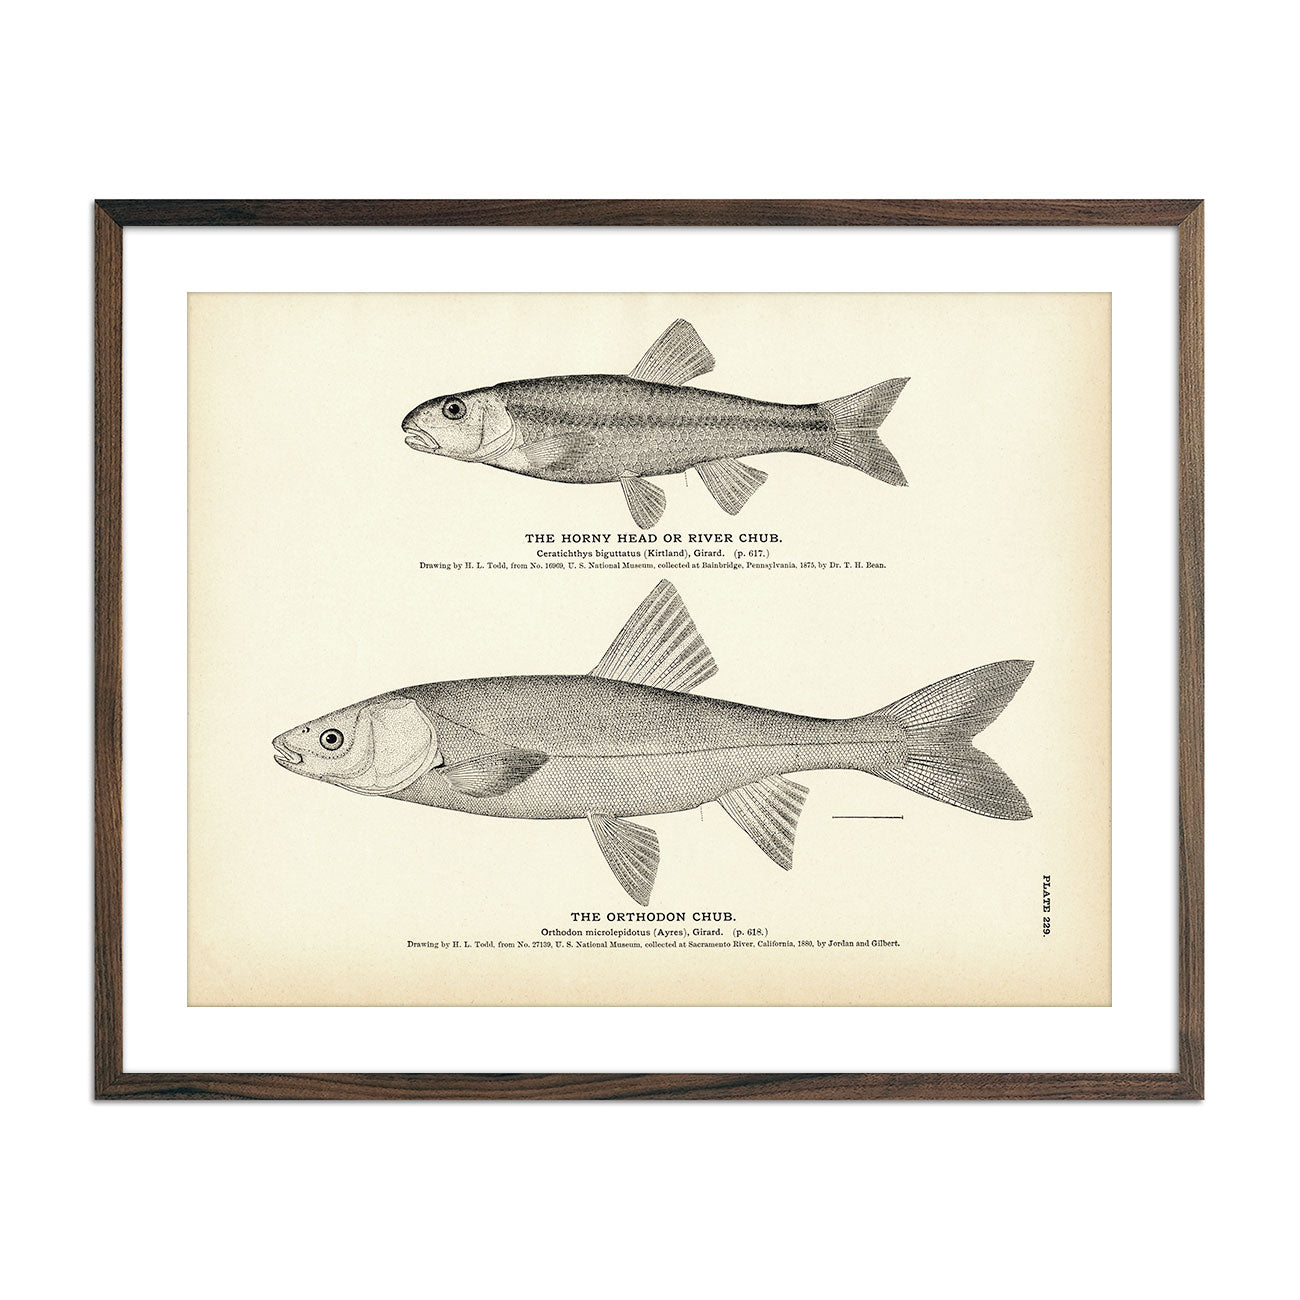 Vintage Horny Head and Orthodon Chub fish print